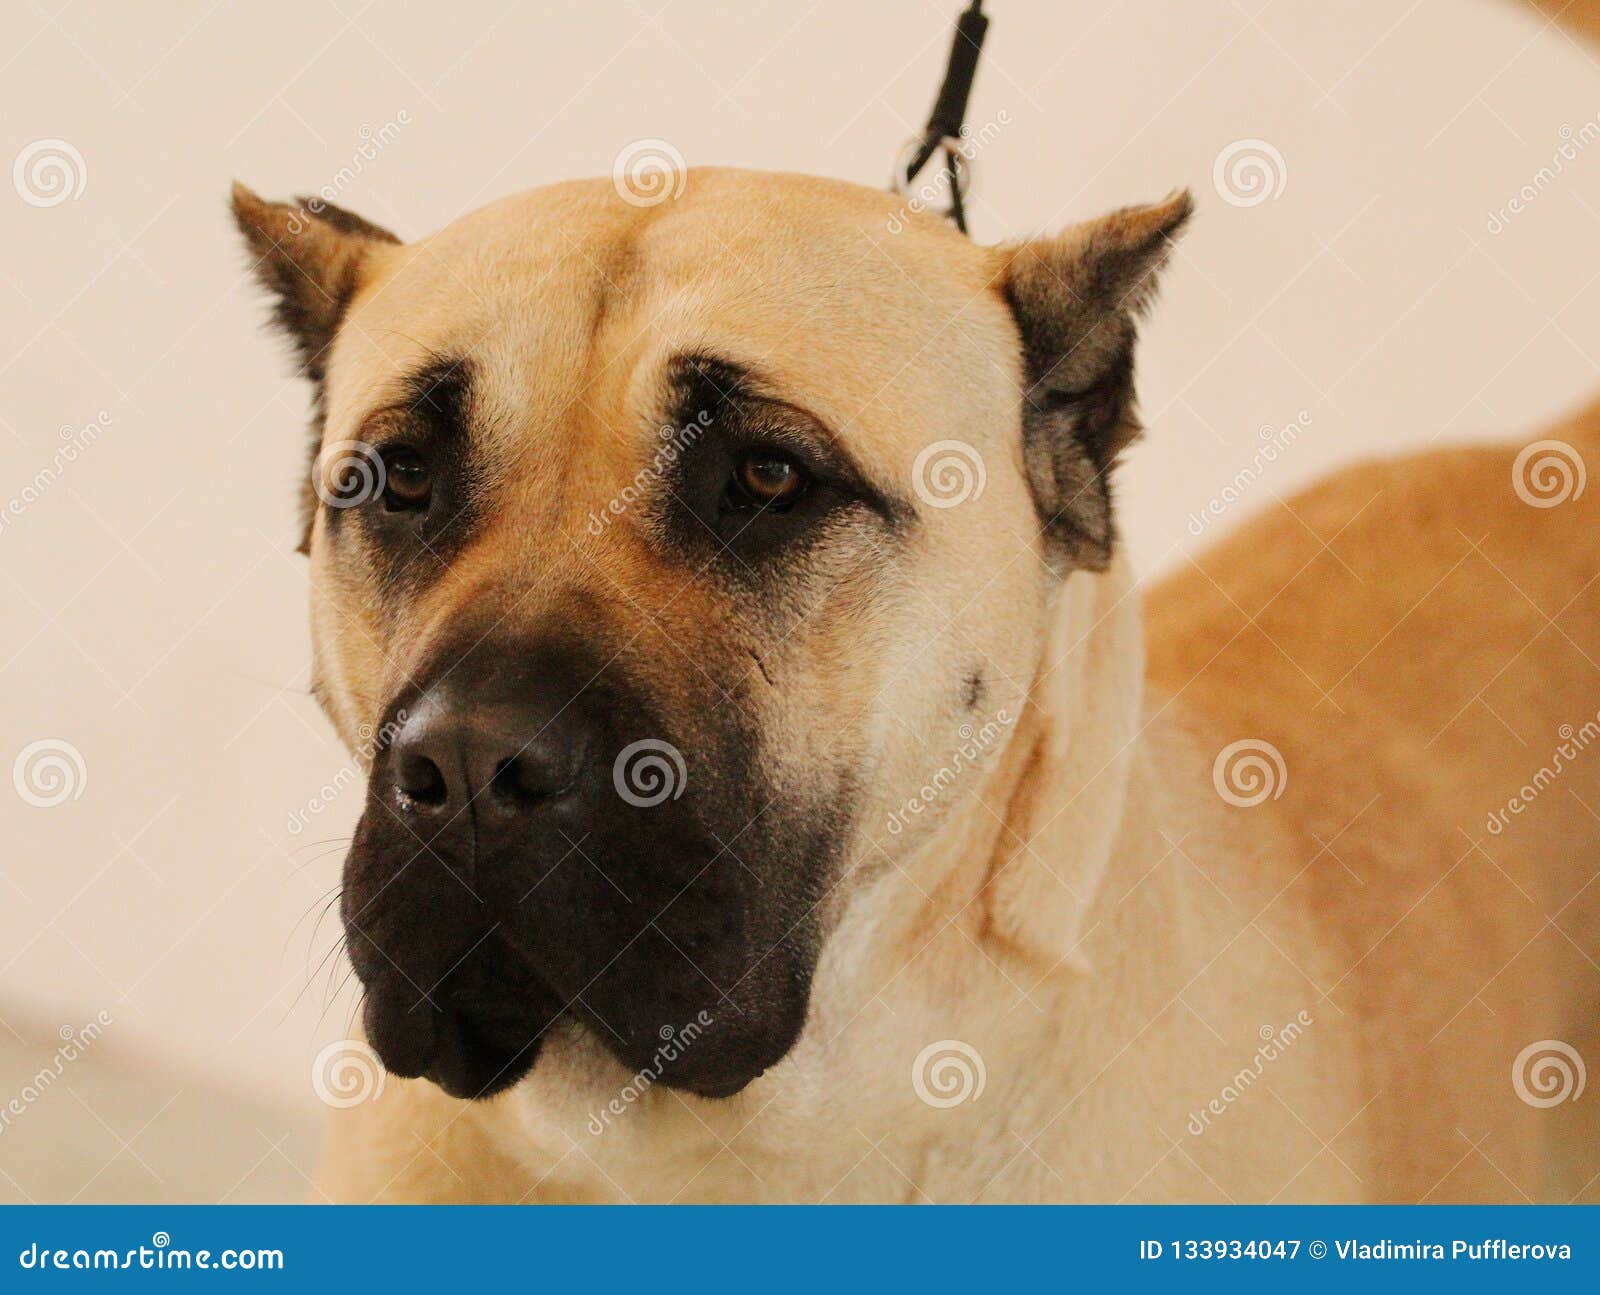 Dog Show Perro De Presa Canario Portrait Stock Image Image Of Beautiful Mammal 133934047